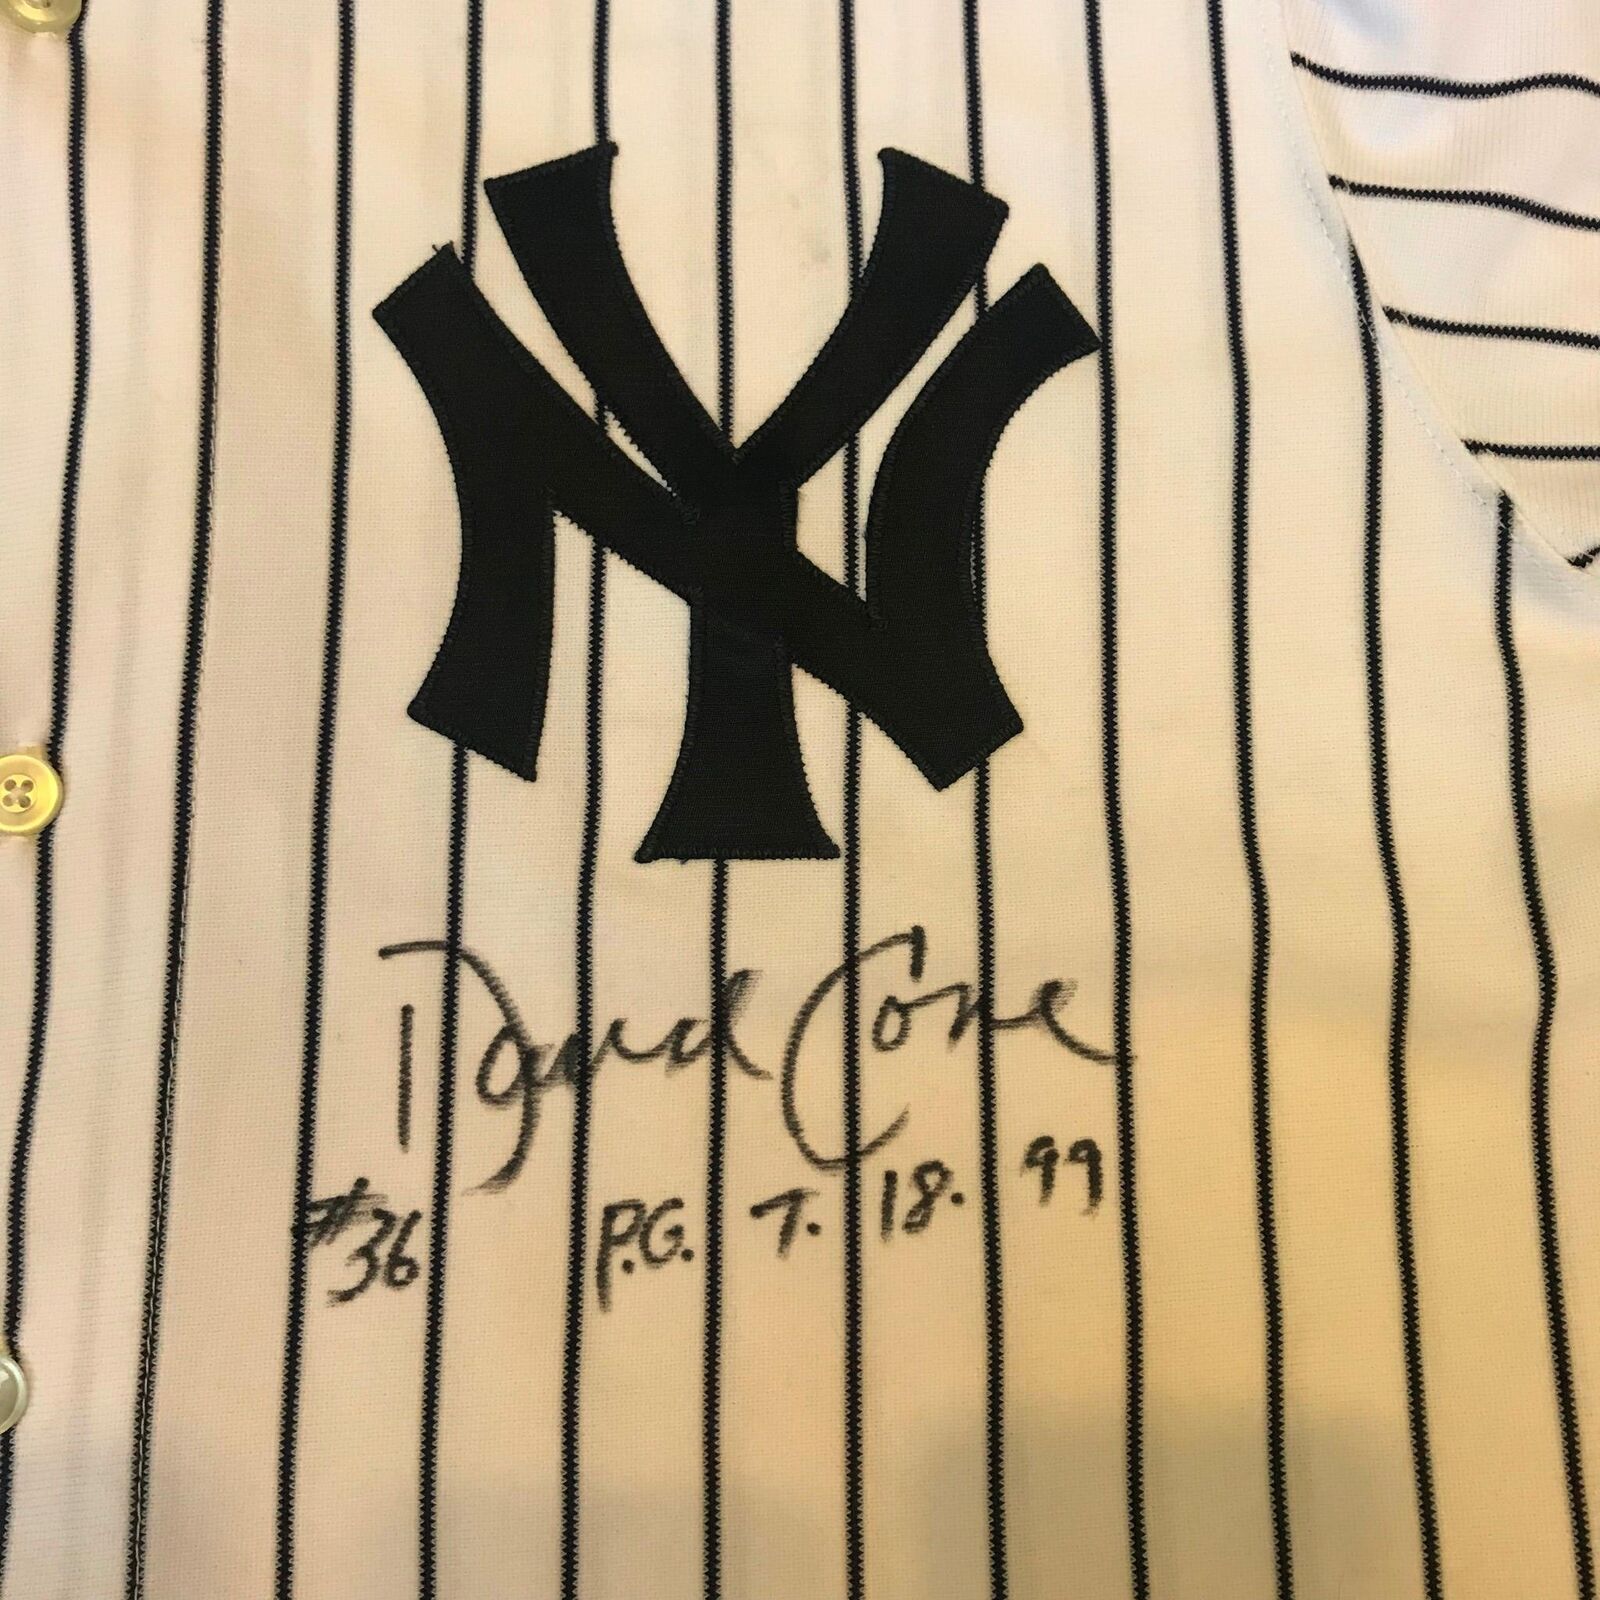 David Cone Signed New York Yankees Jersey Inscribed P.G. 7-18-99 (JSA COA)